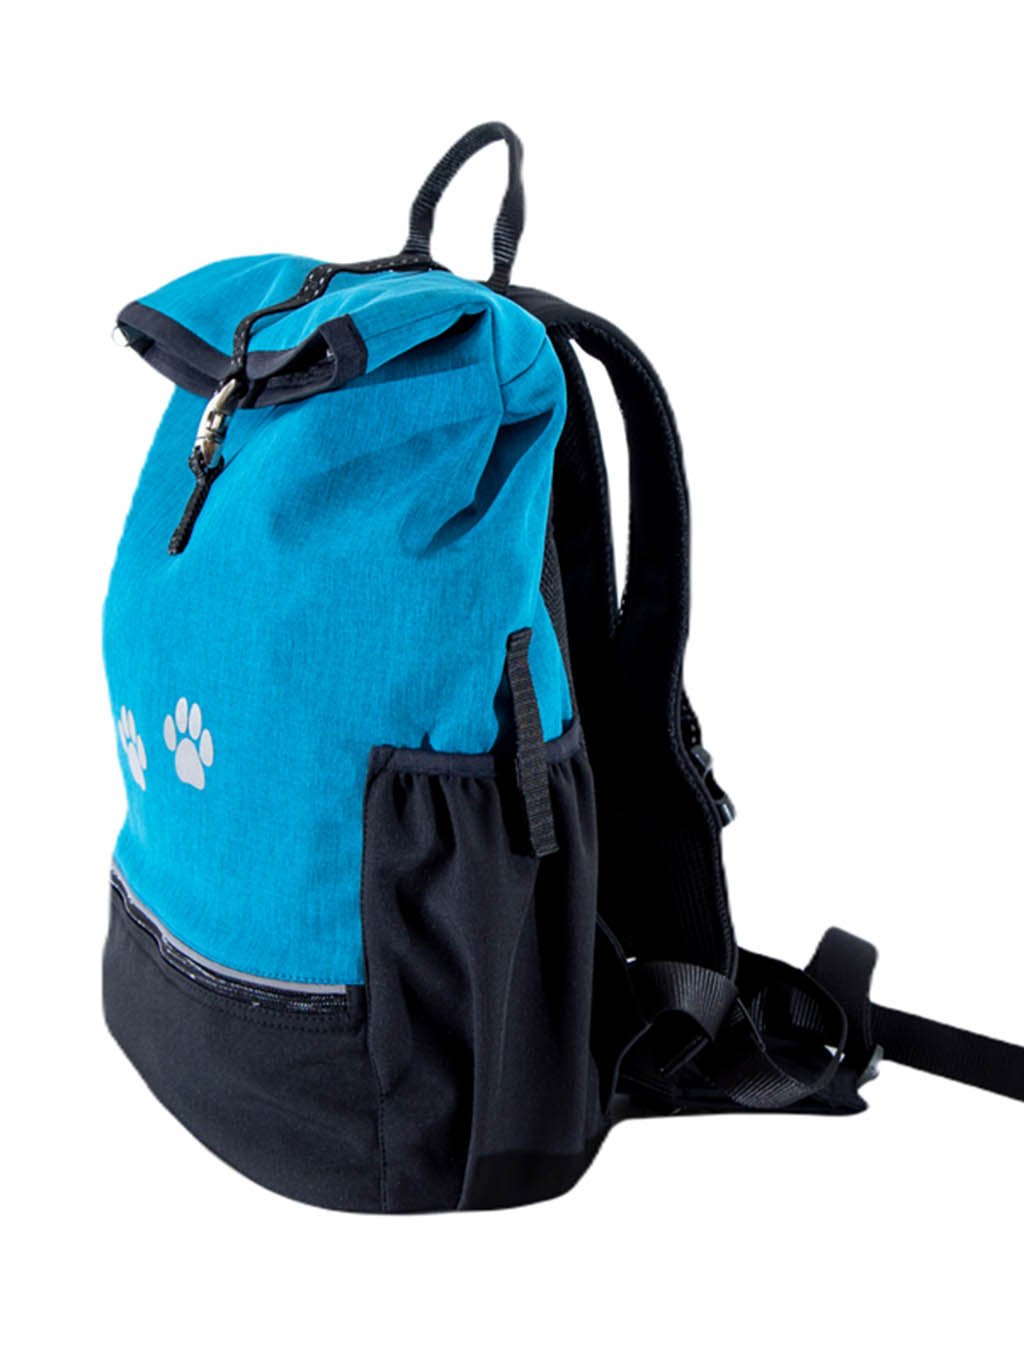 Training backpack Comfort